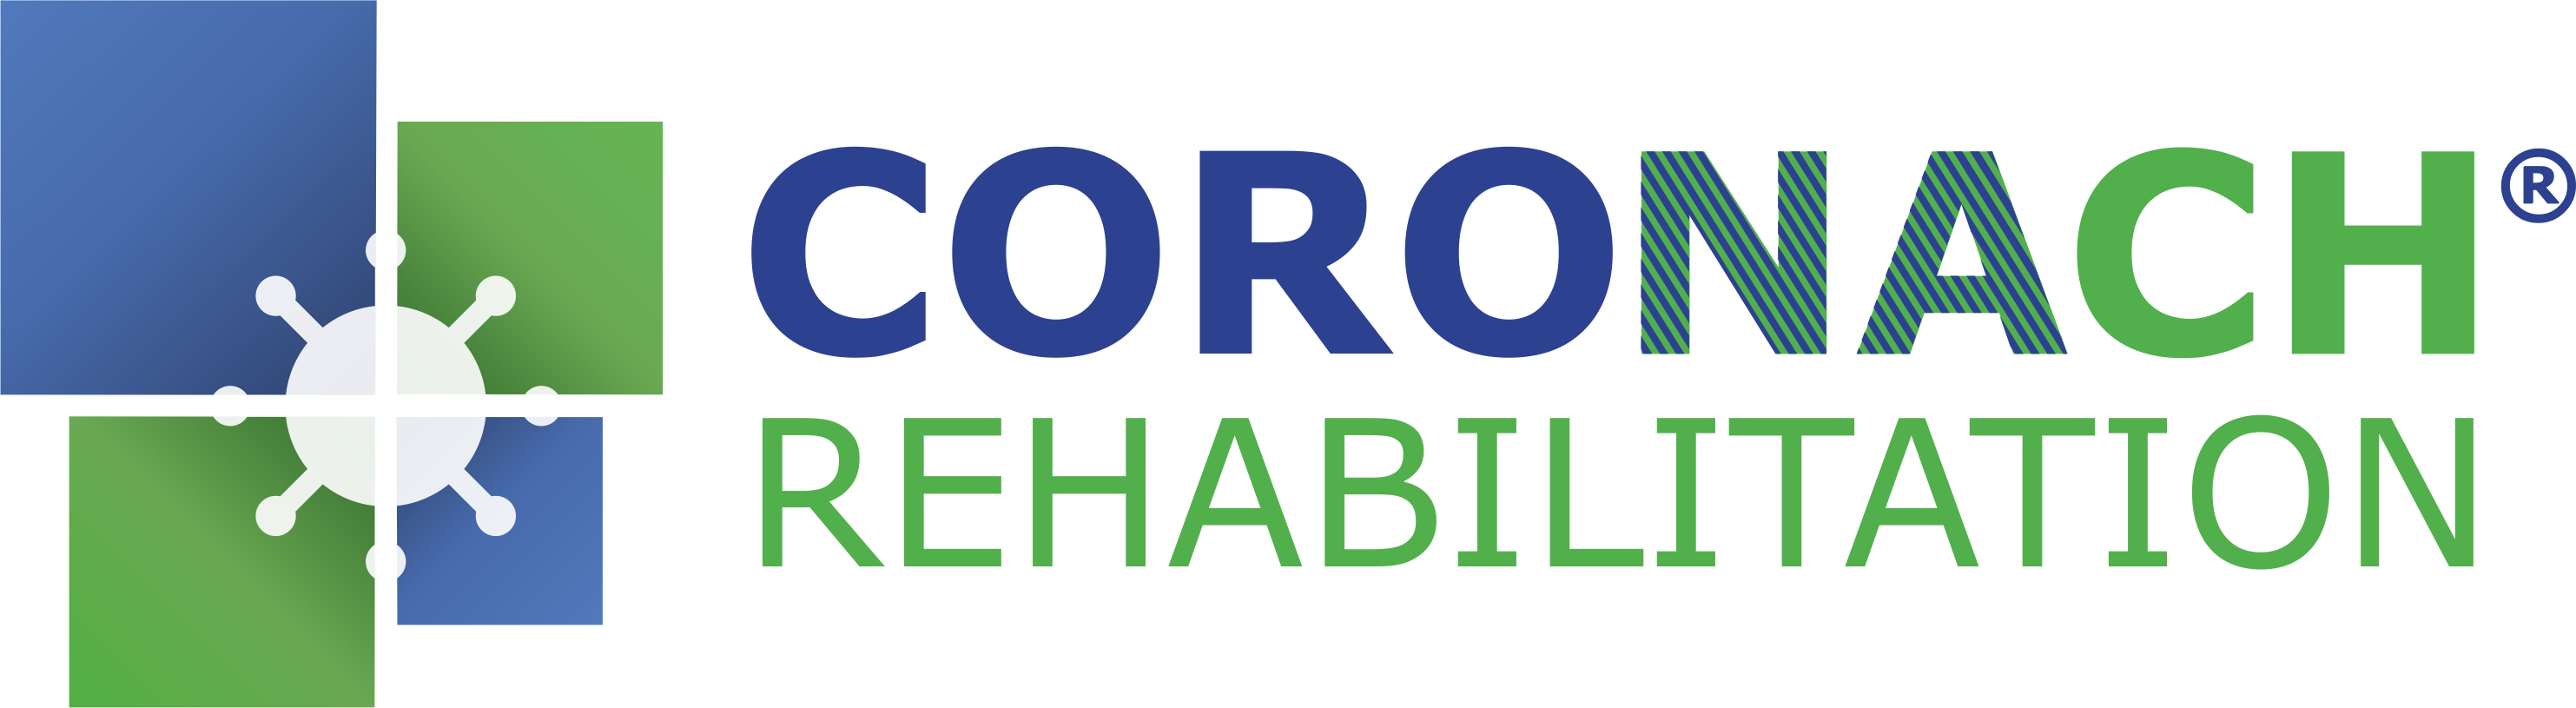 Logo Coronach der Nordseeklinik Westfalen Rehabilitation COVID-19 / CORONA